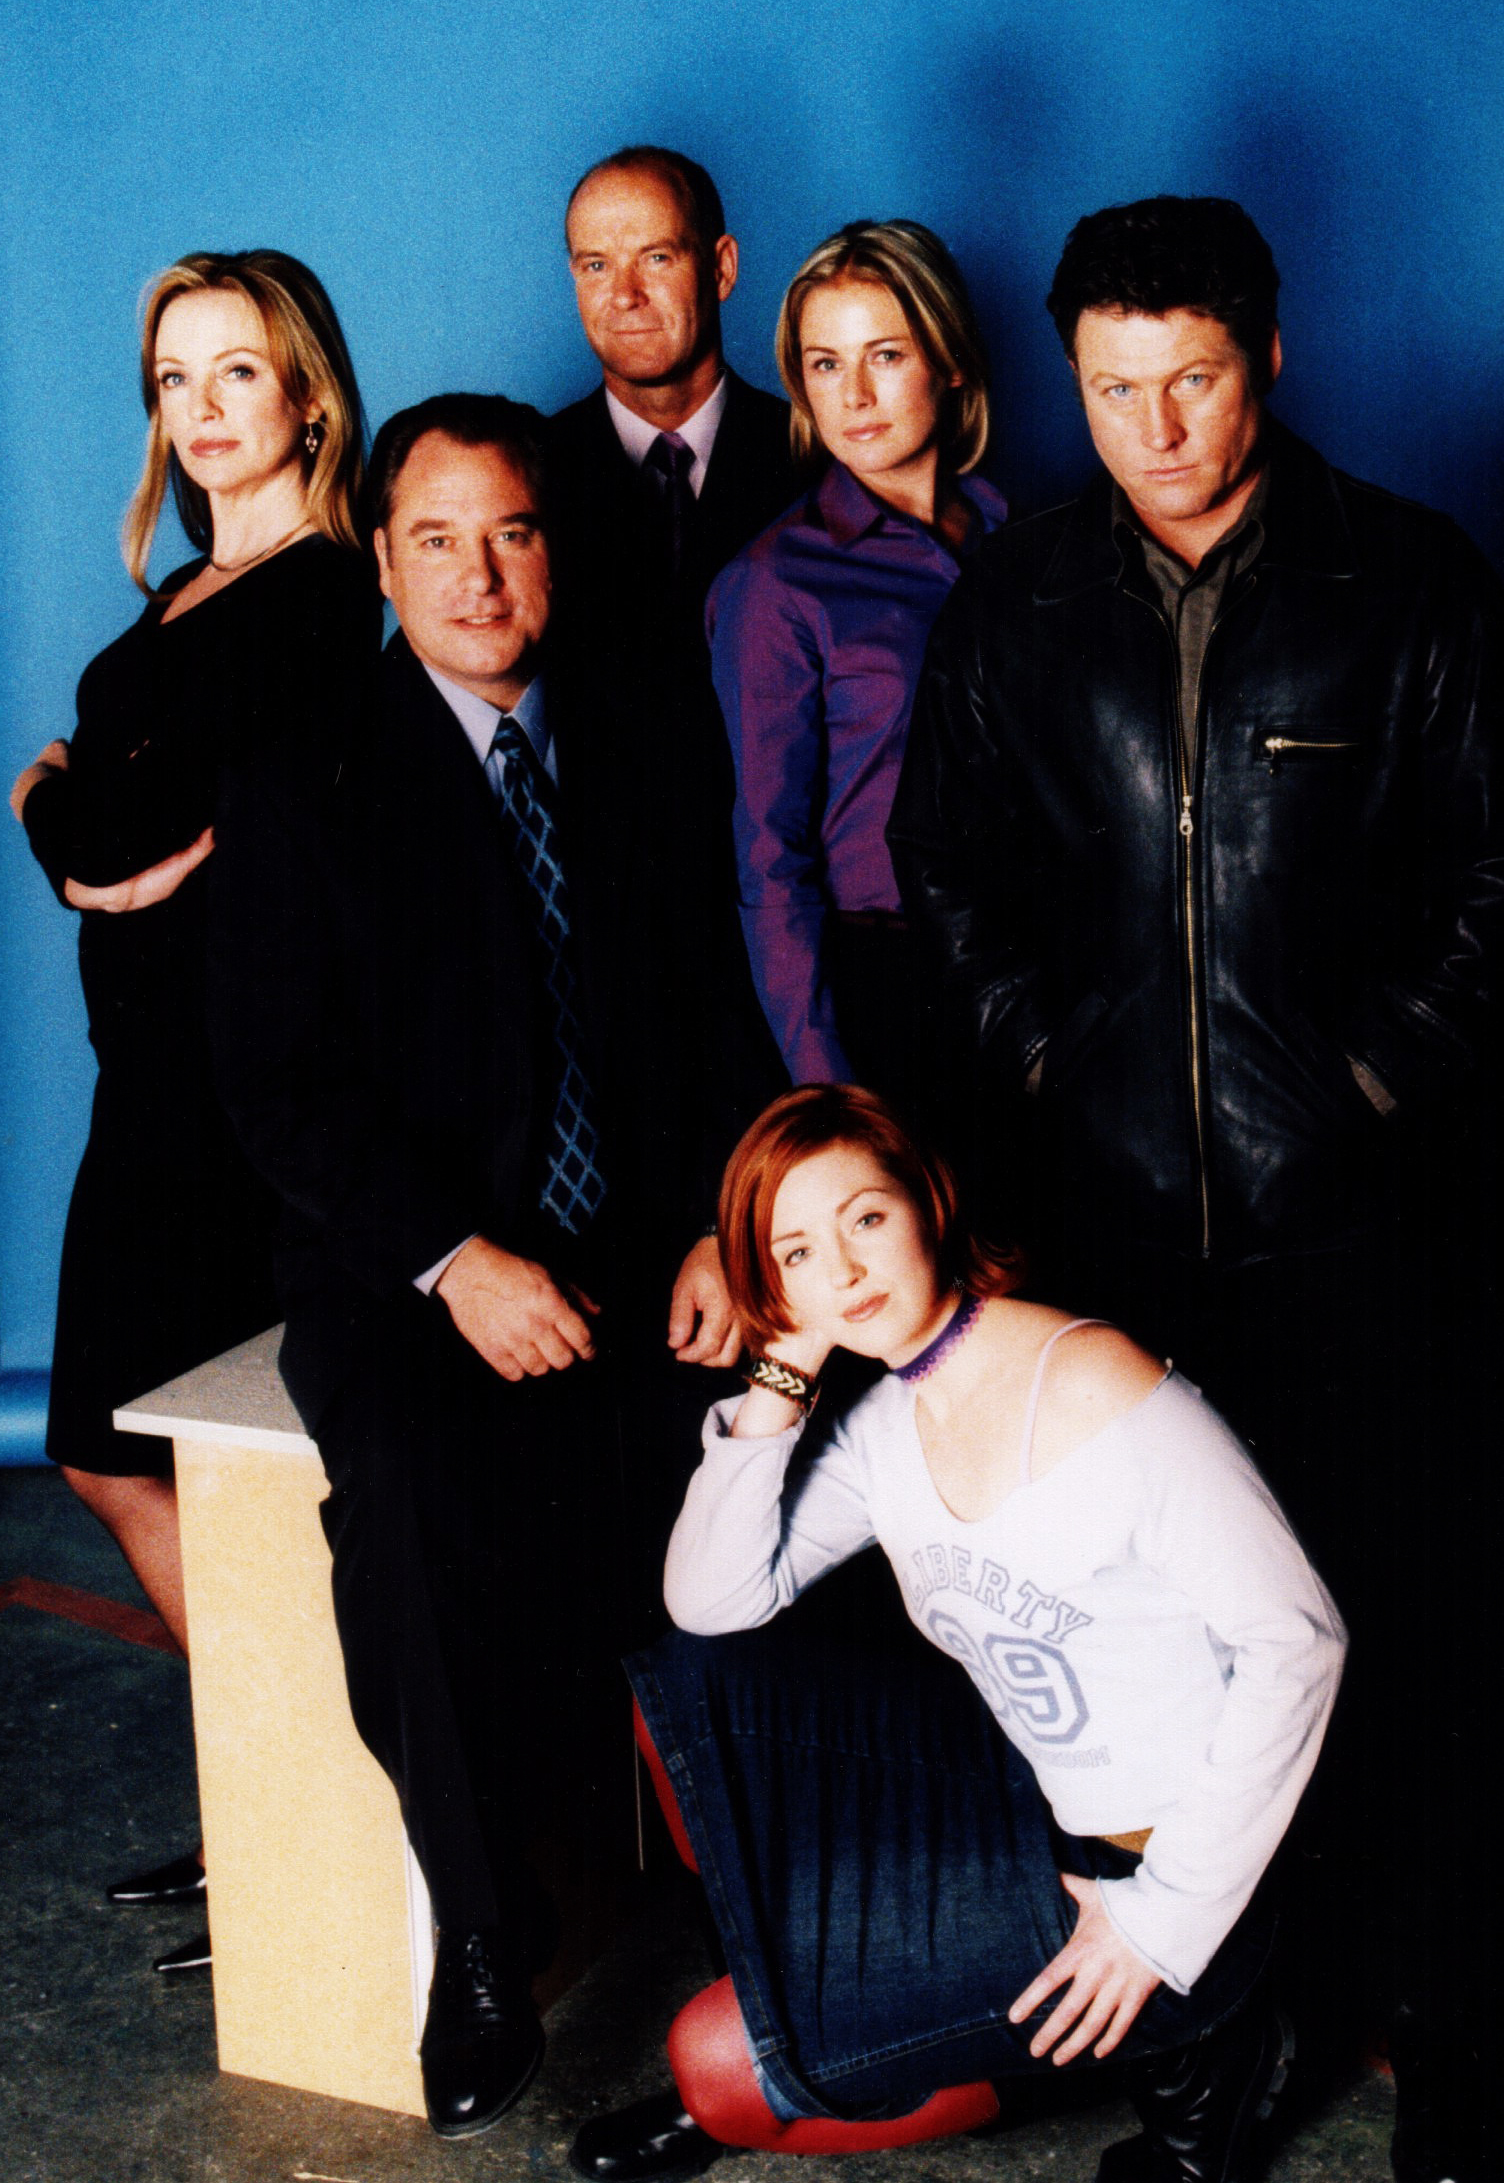 STINGERS Cast 2003 - Rebecca Gibney, Jeremy Kewley, Gary Sweet, Kate Kendall, Jacinta Stapleton & Peter Phelps.